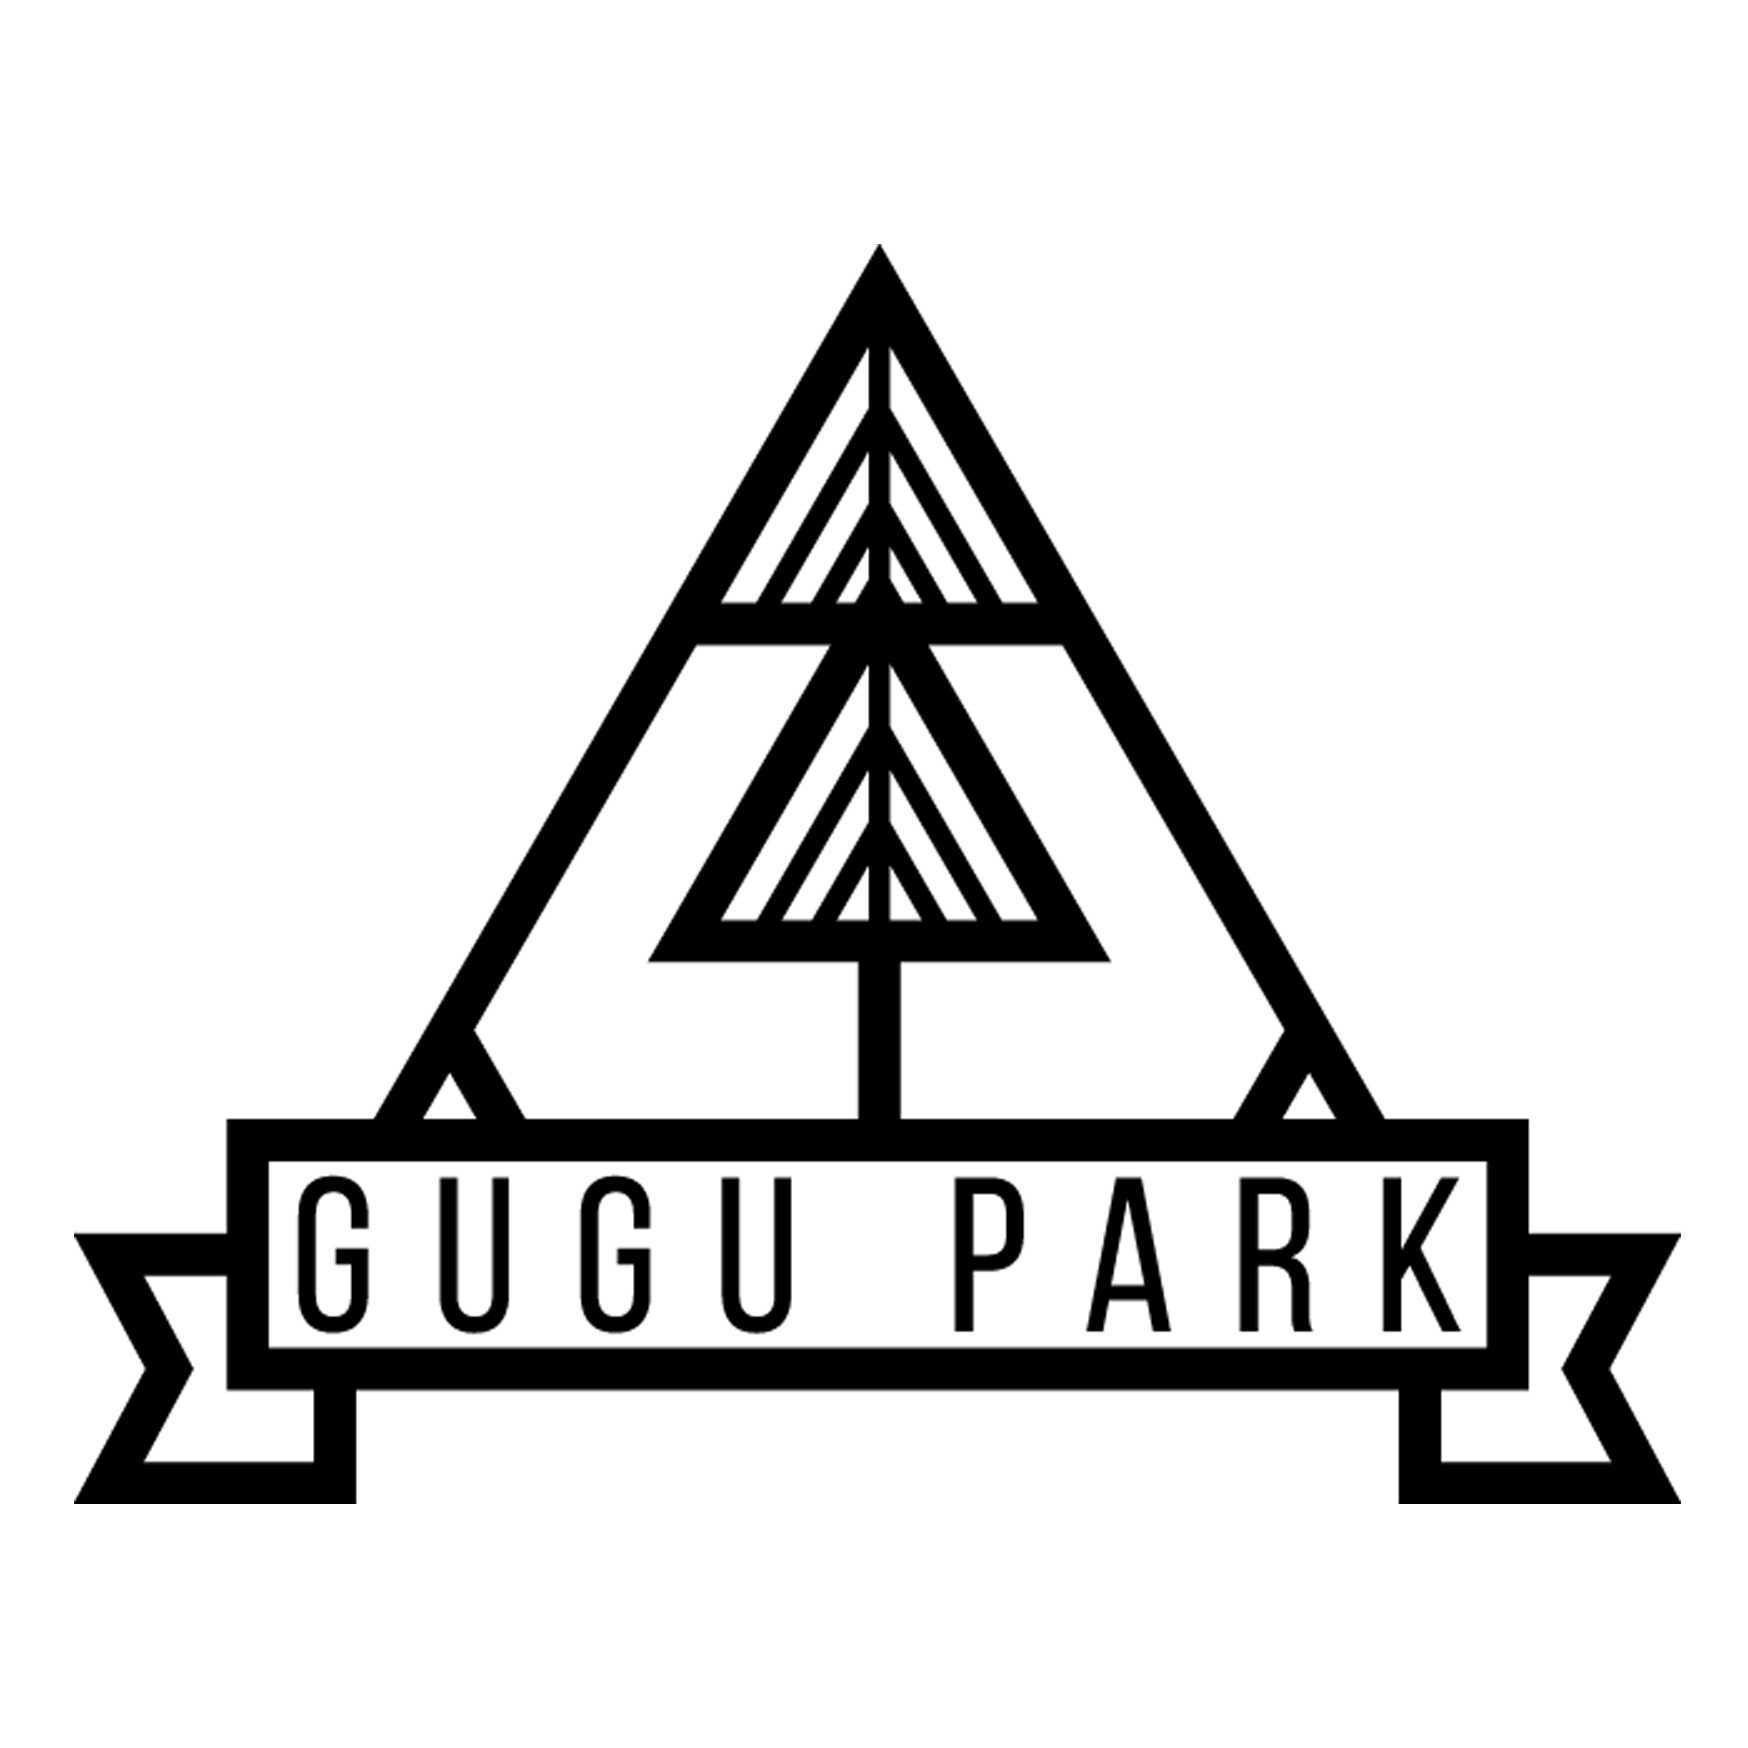 GUGU_PARK_FINAL